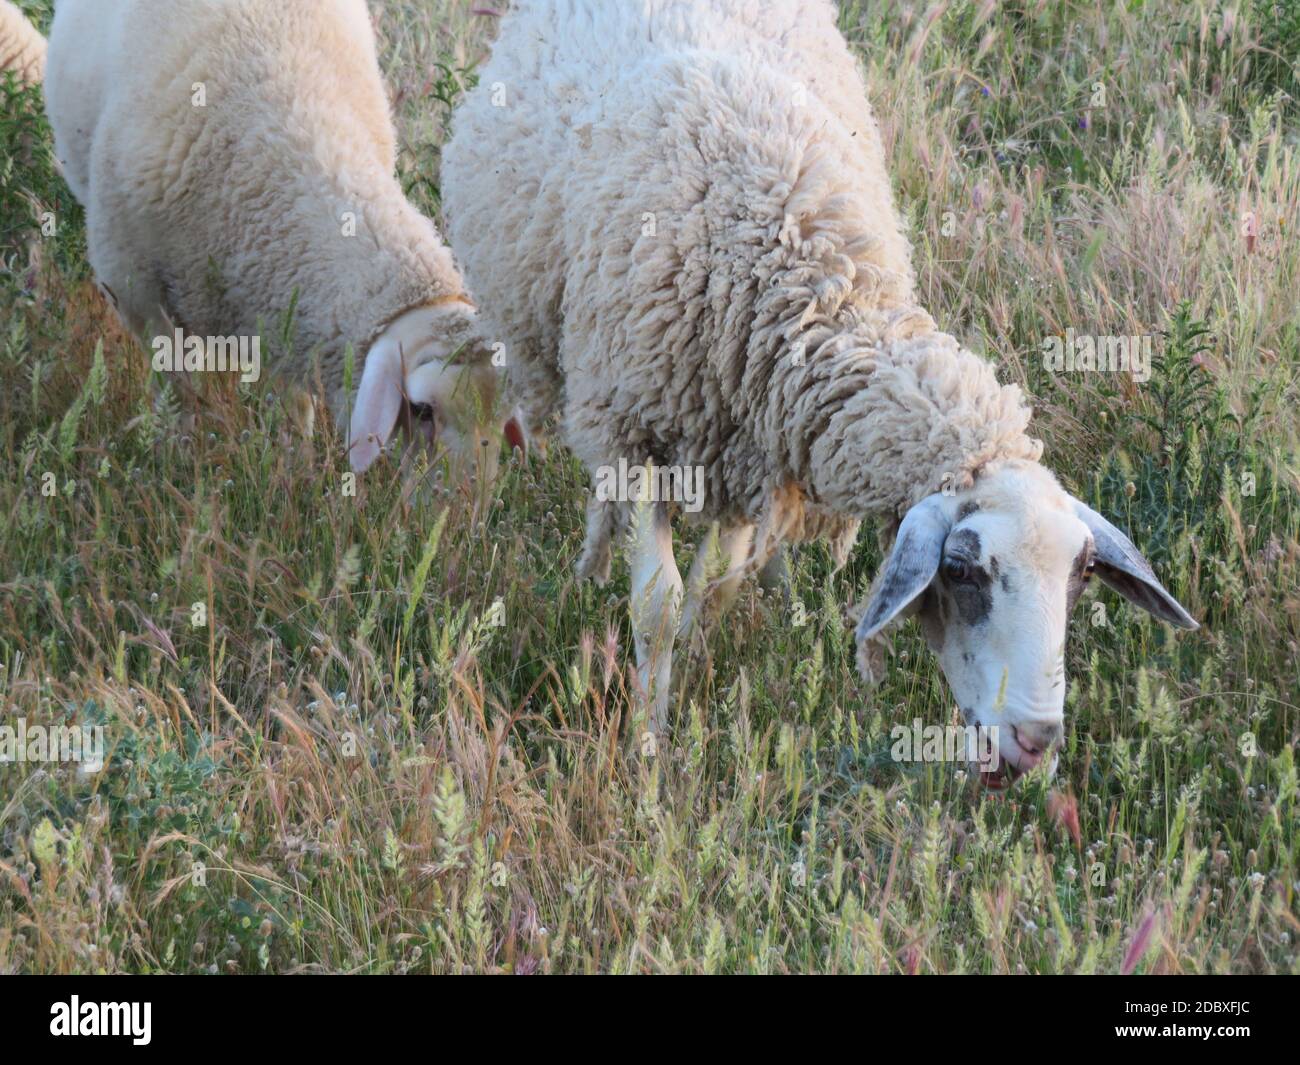 sheep lambs wool animal milk natural meat food farm Stock Photo - Alamy